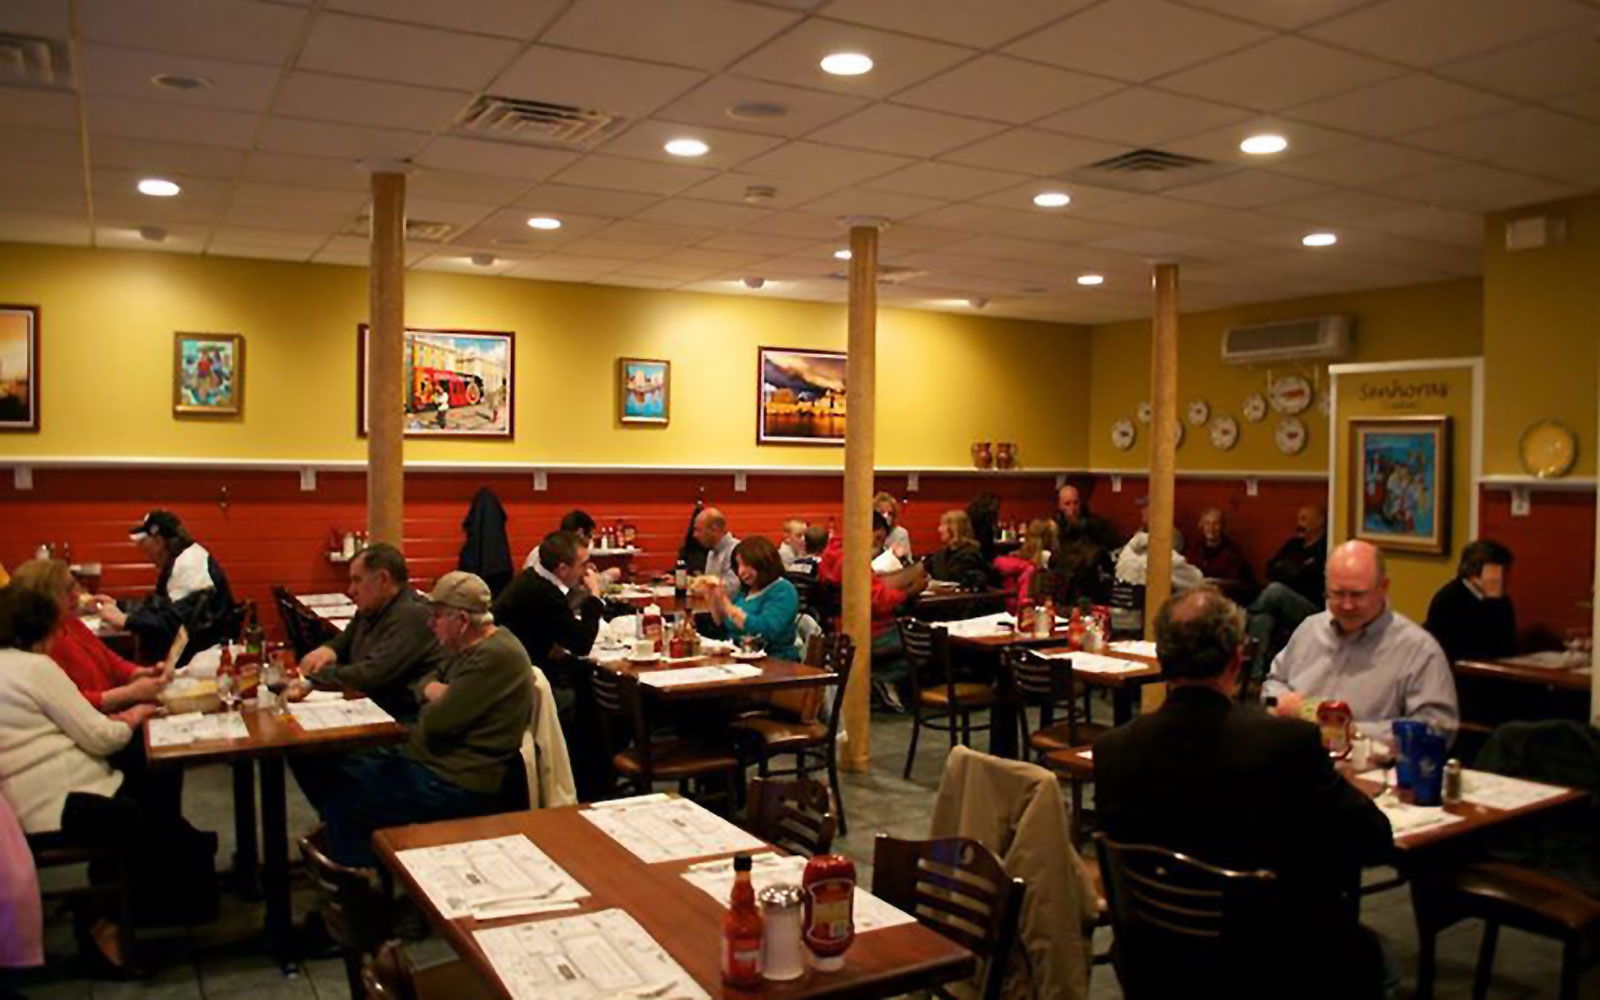 Antonio's Restaurant in Portuguese & American food in New Bedford, MA.